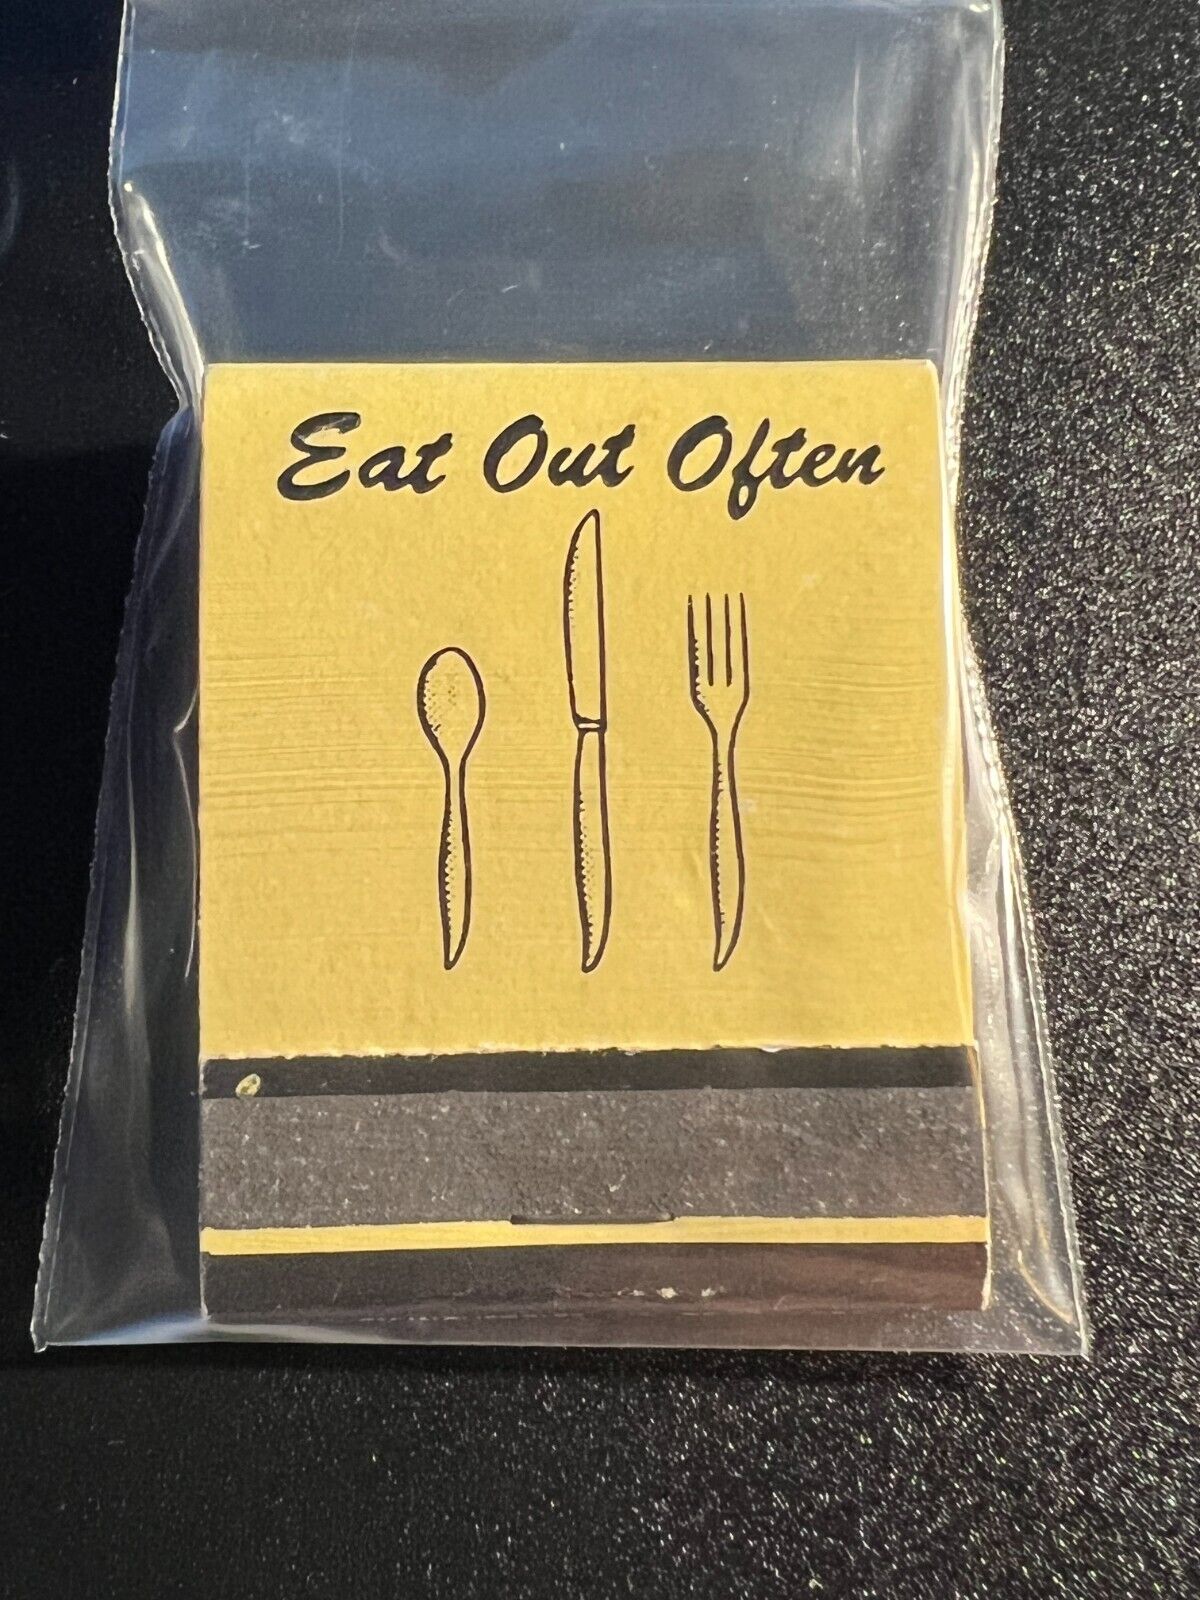 VINTAGE MATCHBOOK - EAT OUT OFTEN - THANK YOU -UNSTRUCK